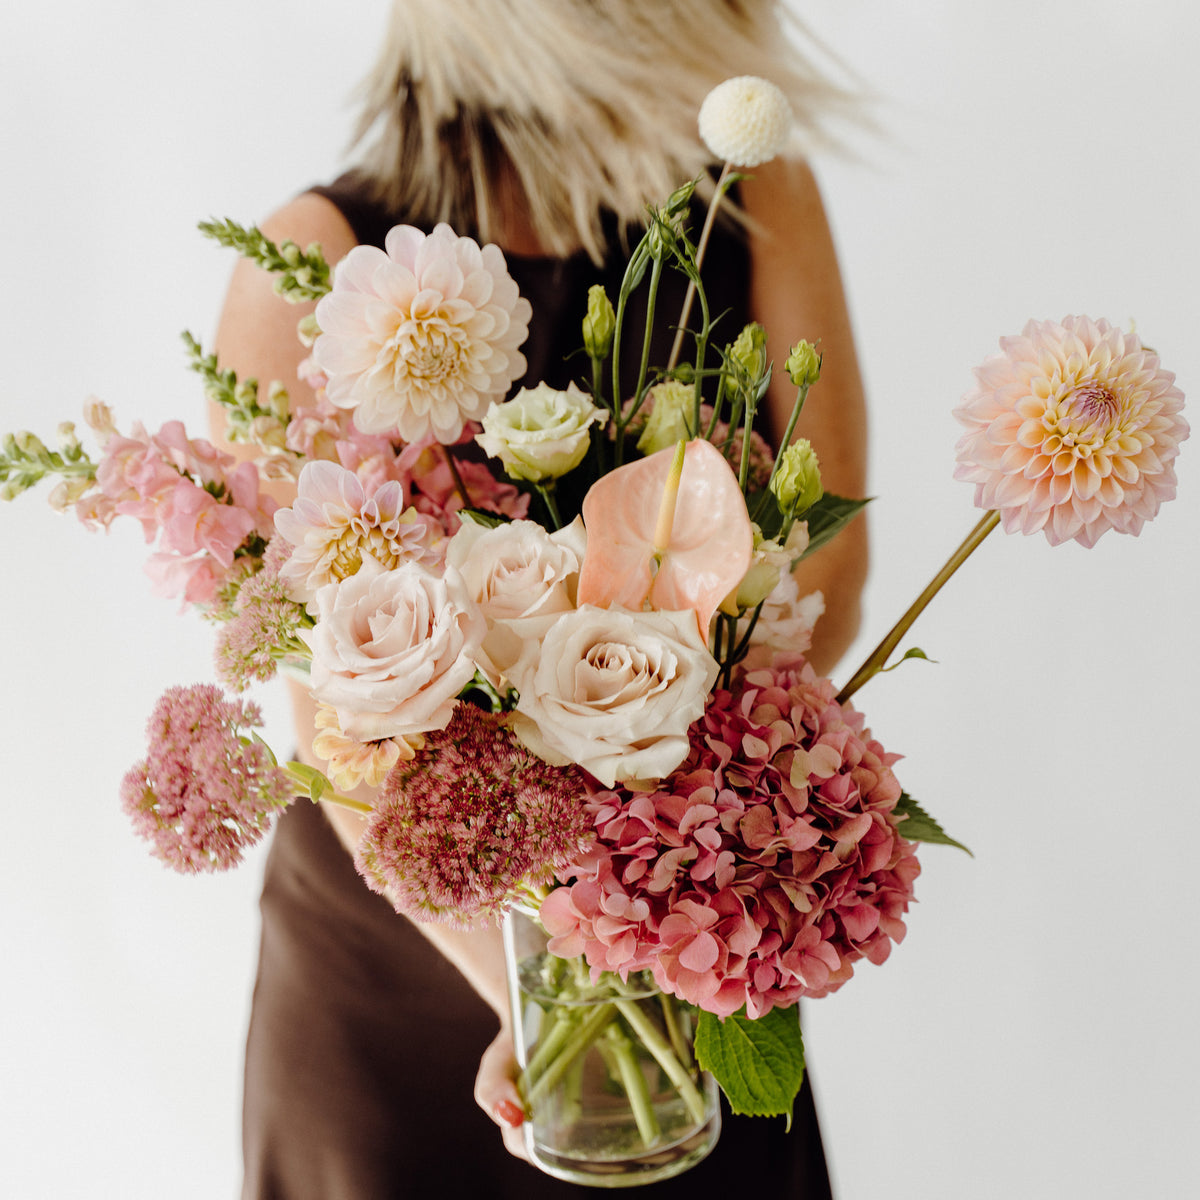 Luxe Floral Bouquet In Vase + J'aime Les Classic Macarons